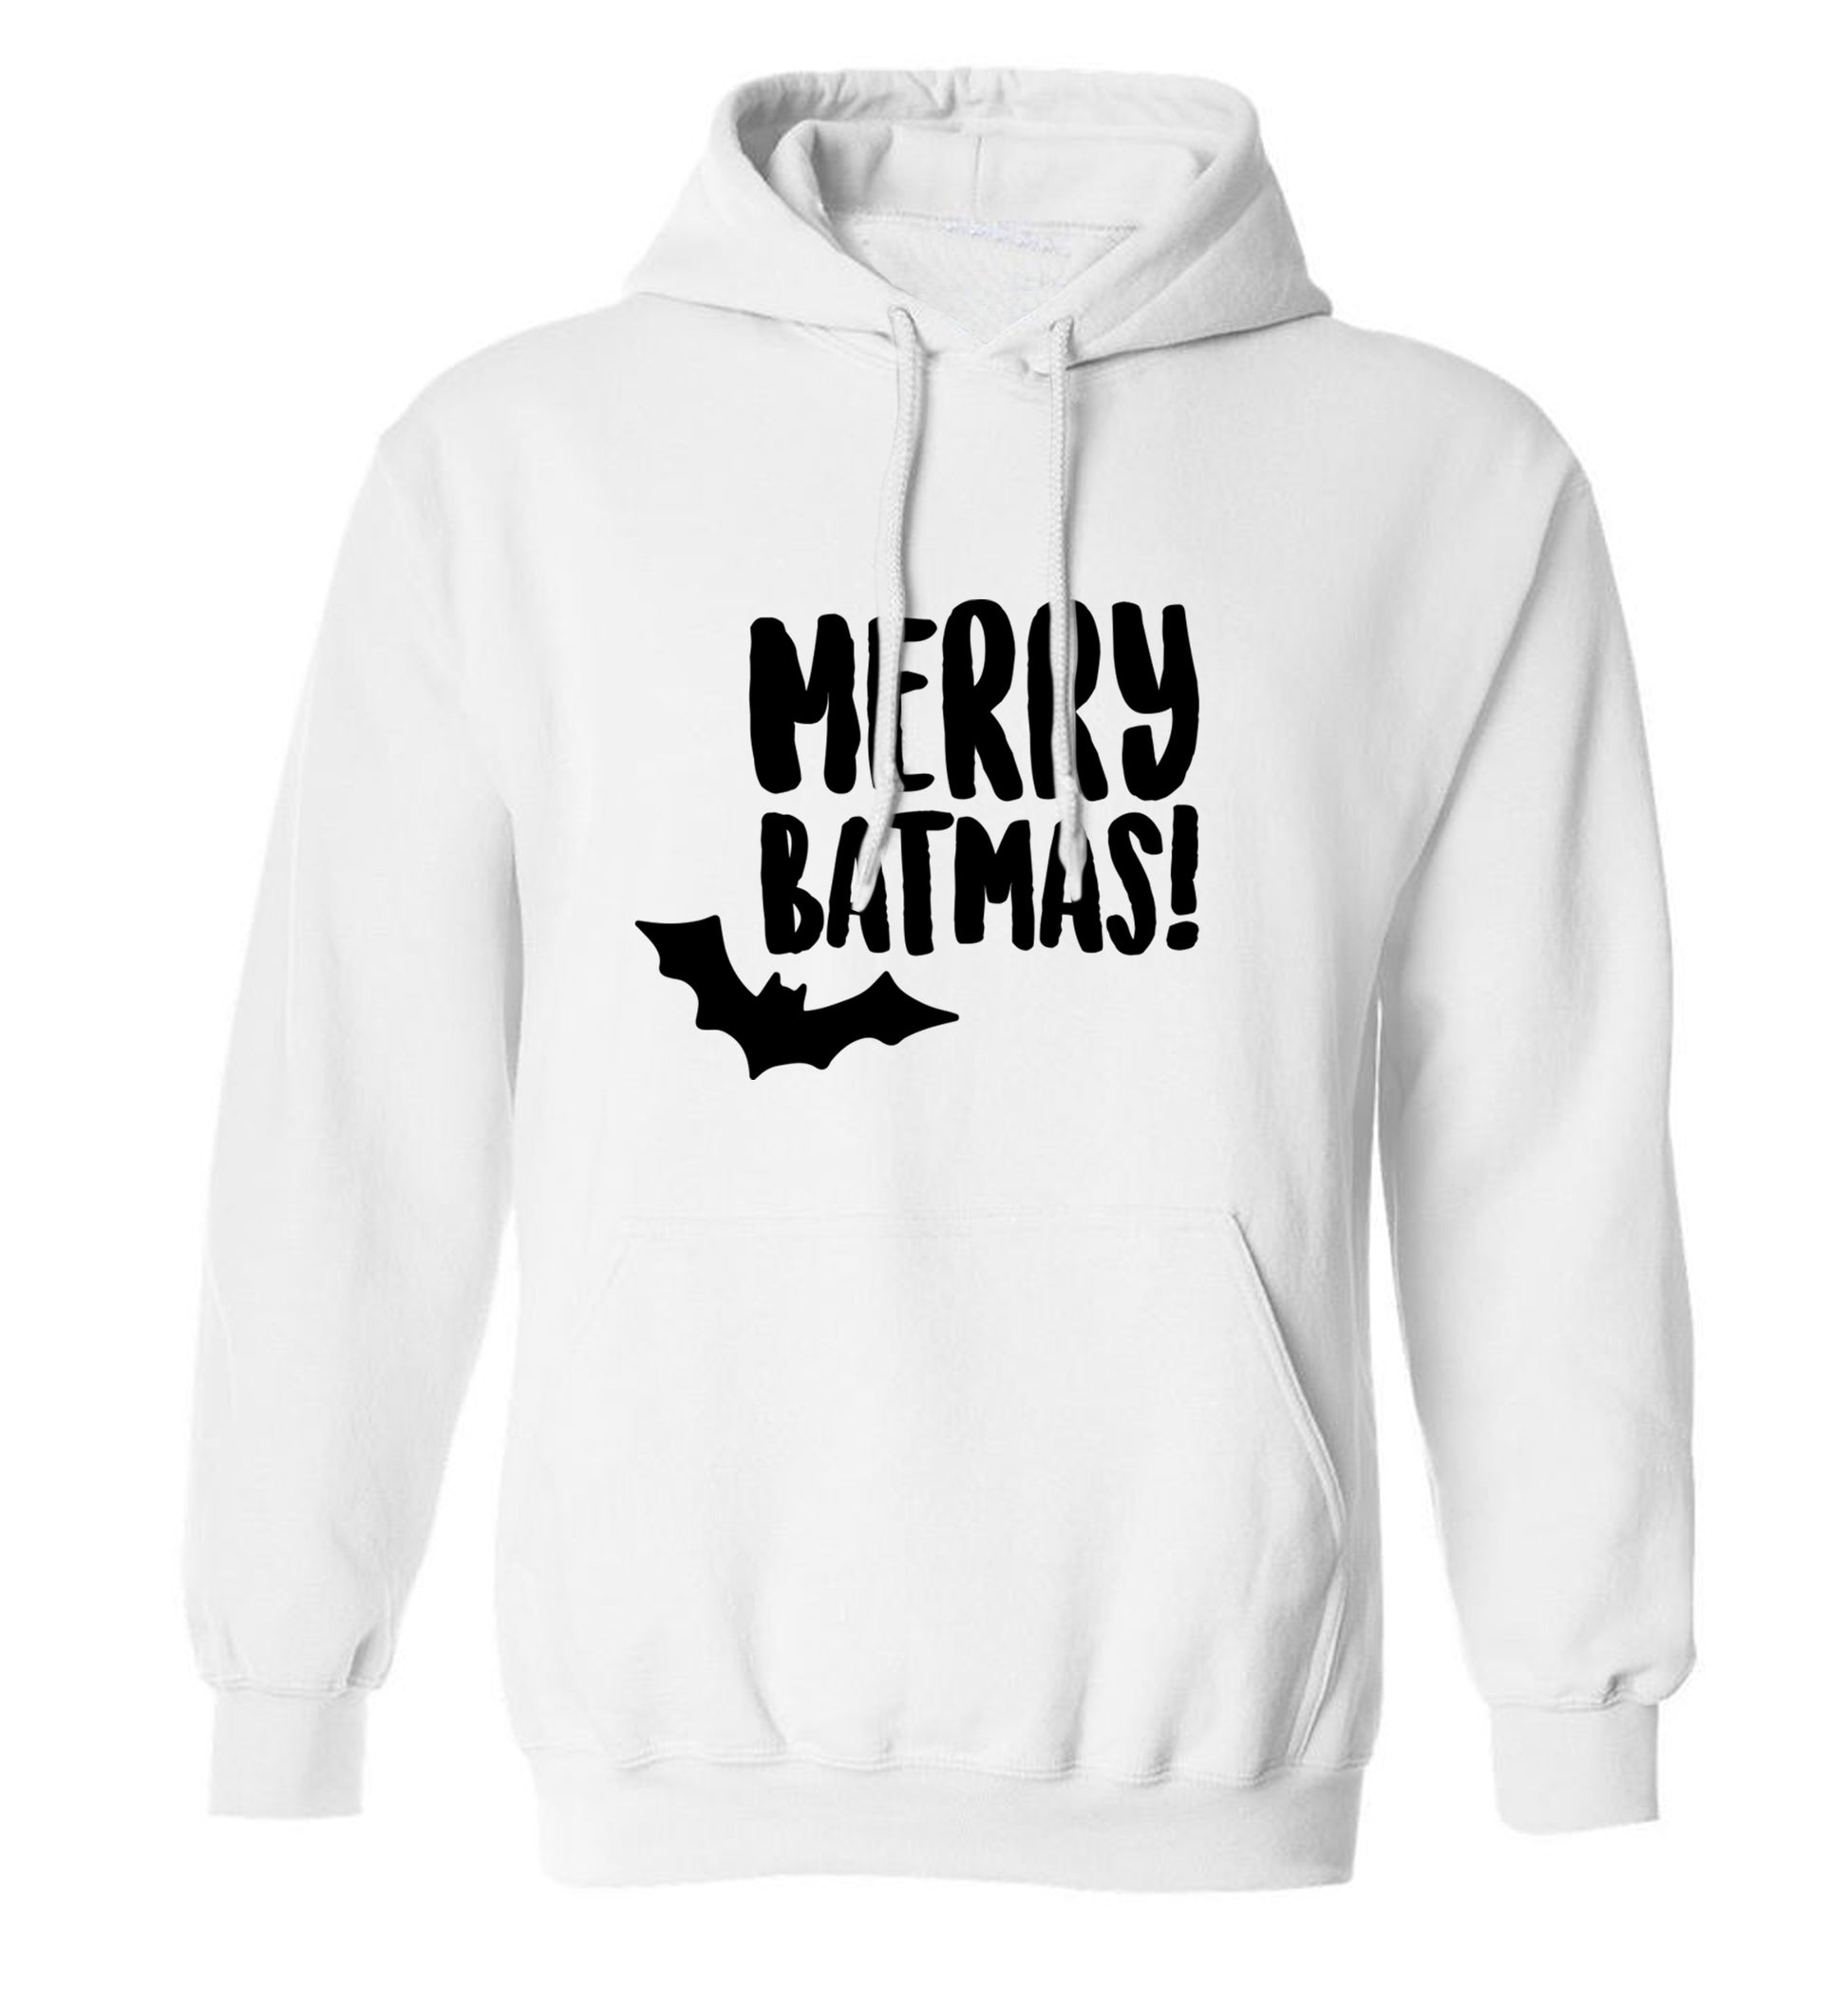 Merry Batmas adults unisex white hoodie 2XL